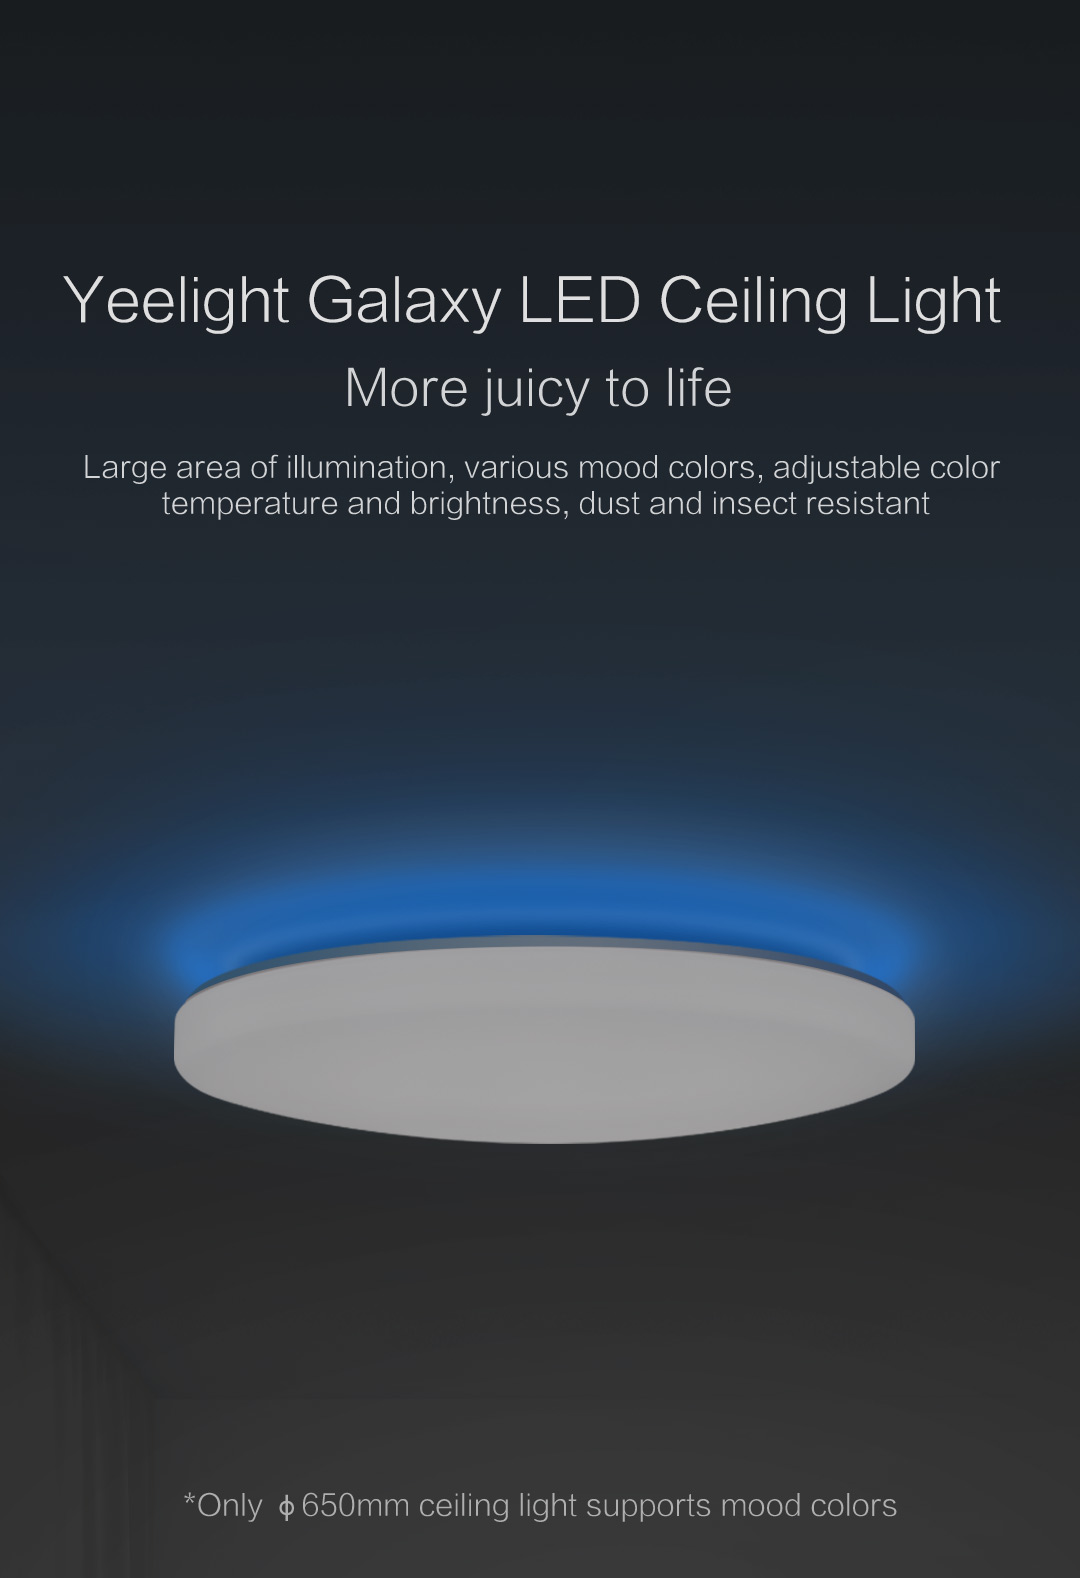 Yeelight Galaxy LED Ceiling Light 